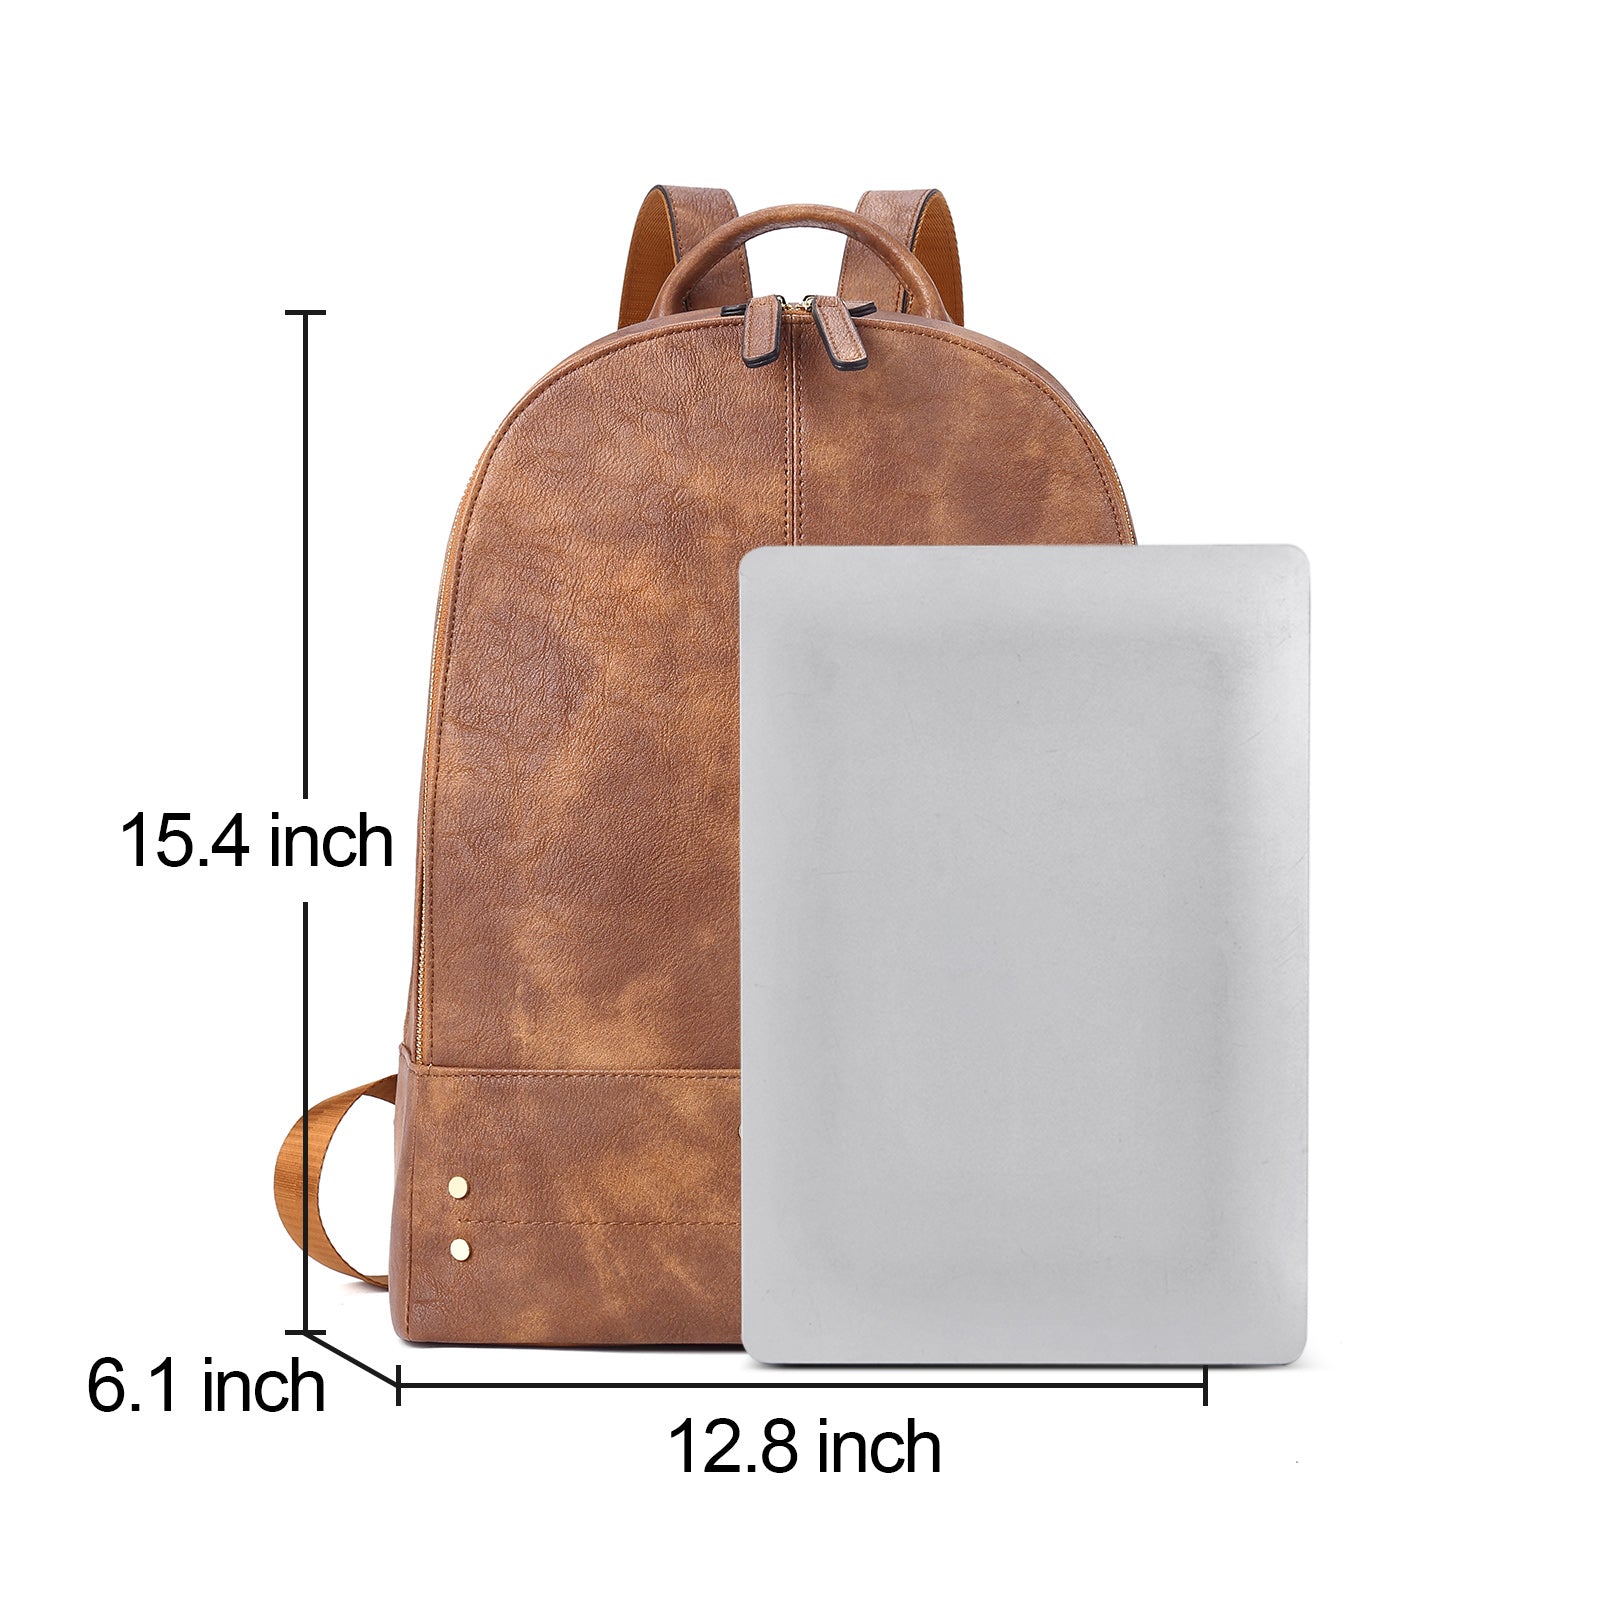 CLUCI Laptop Backpack for Women Leather 15.6 inch Computer Backpack Travel Vintage Large College Bag